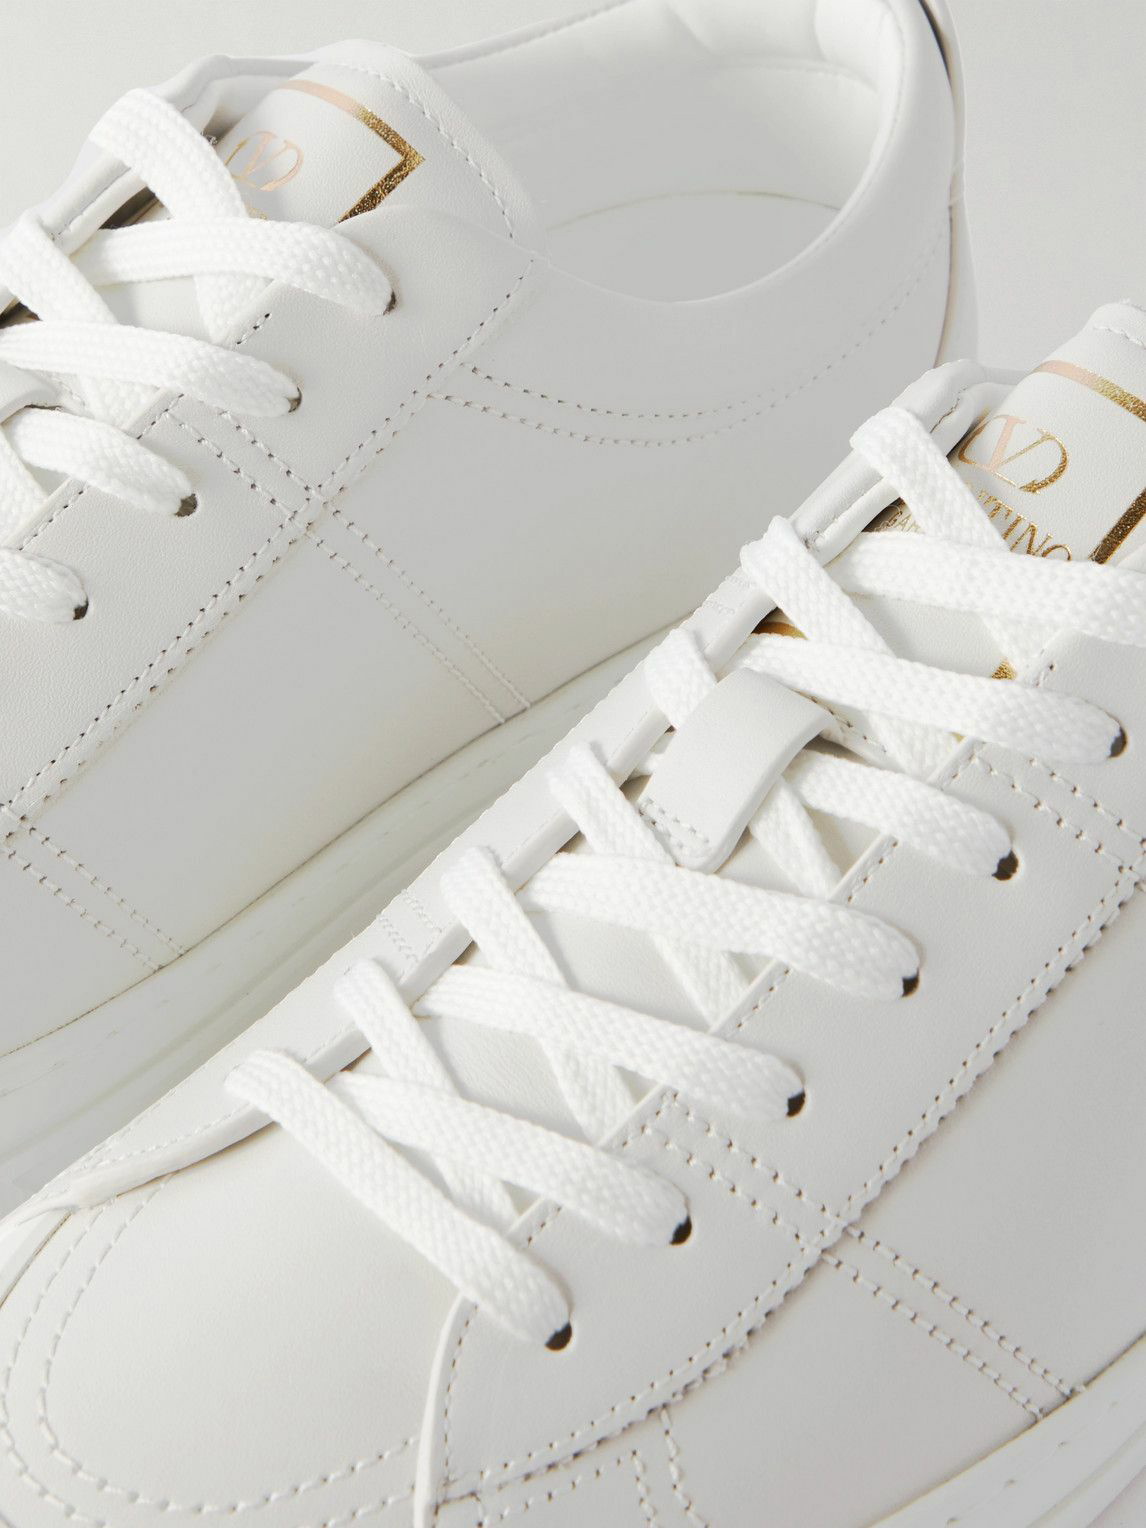 Valentino Garavani Rockstud low-top sneakers - White